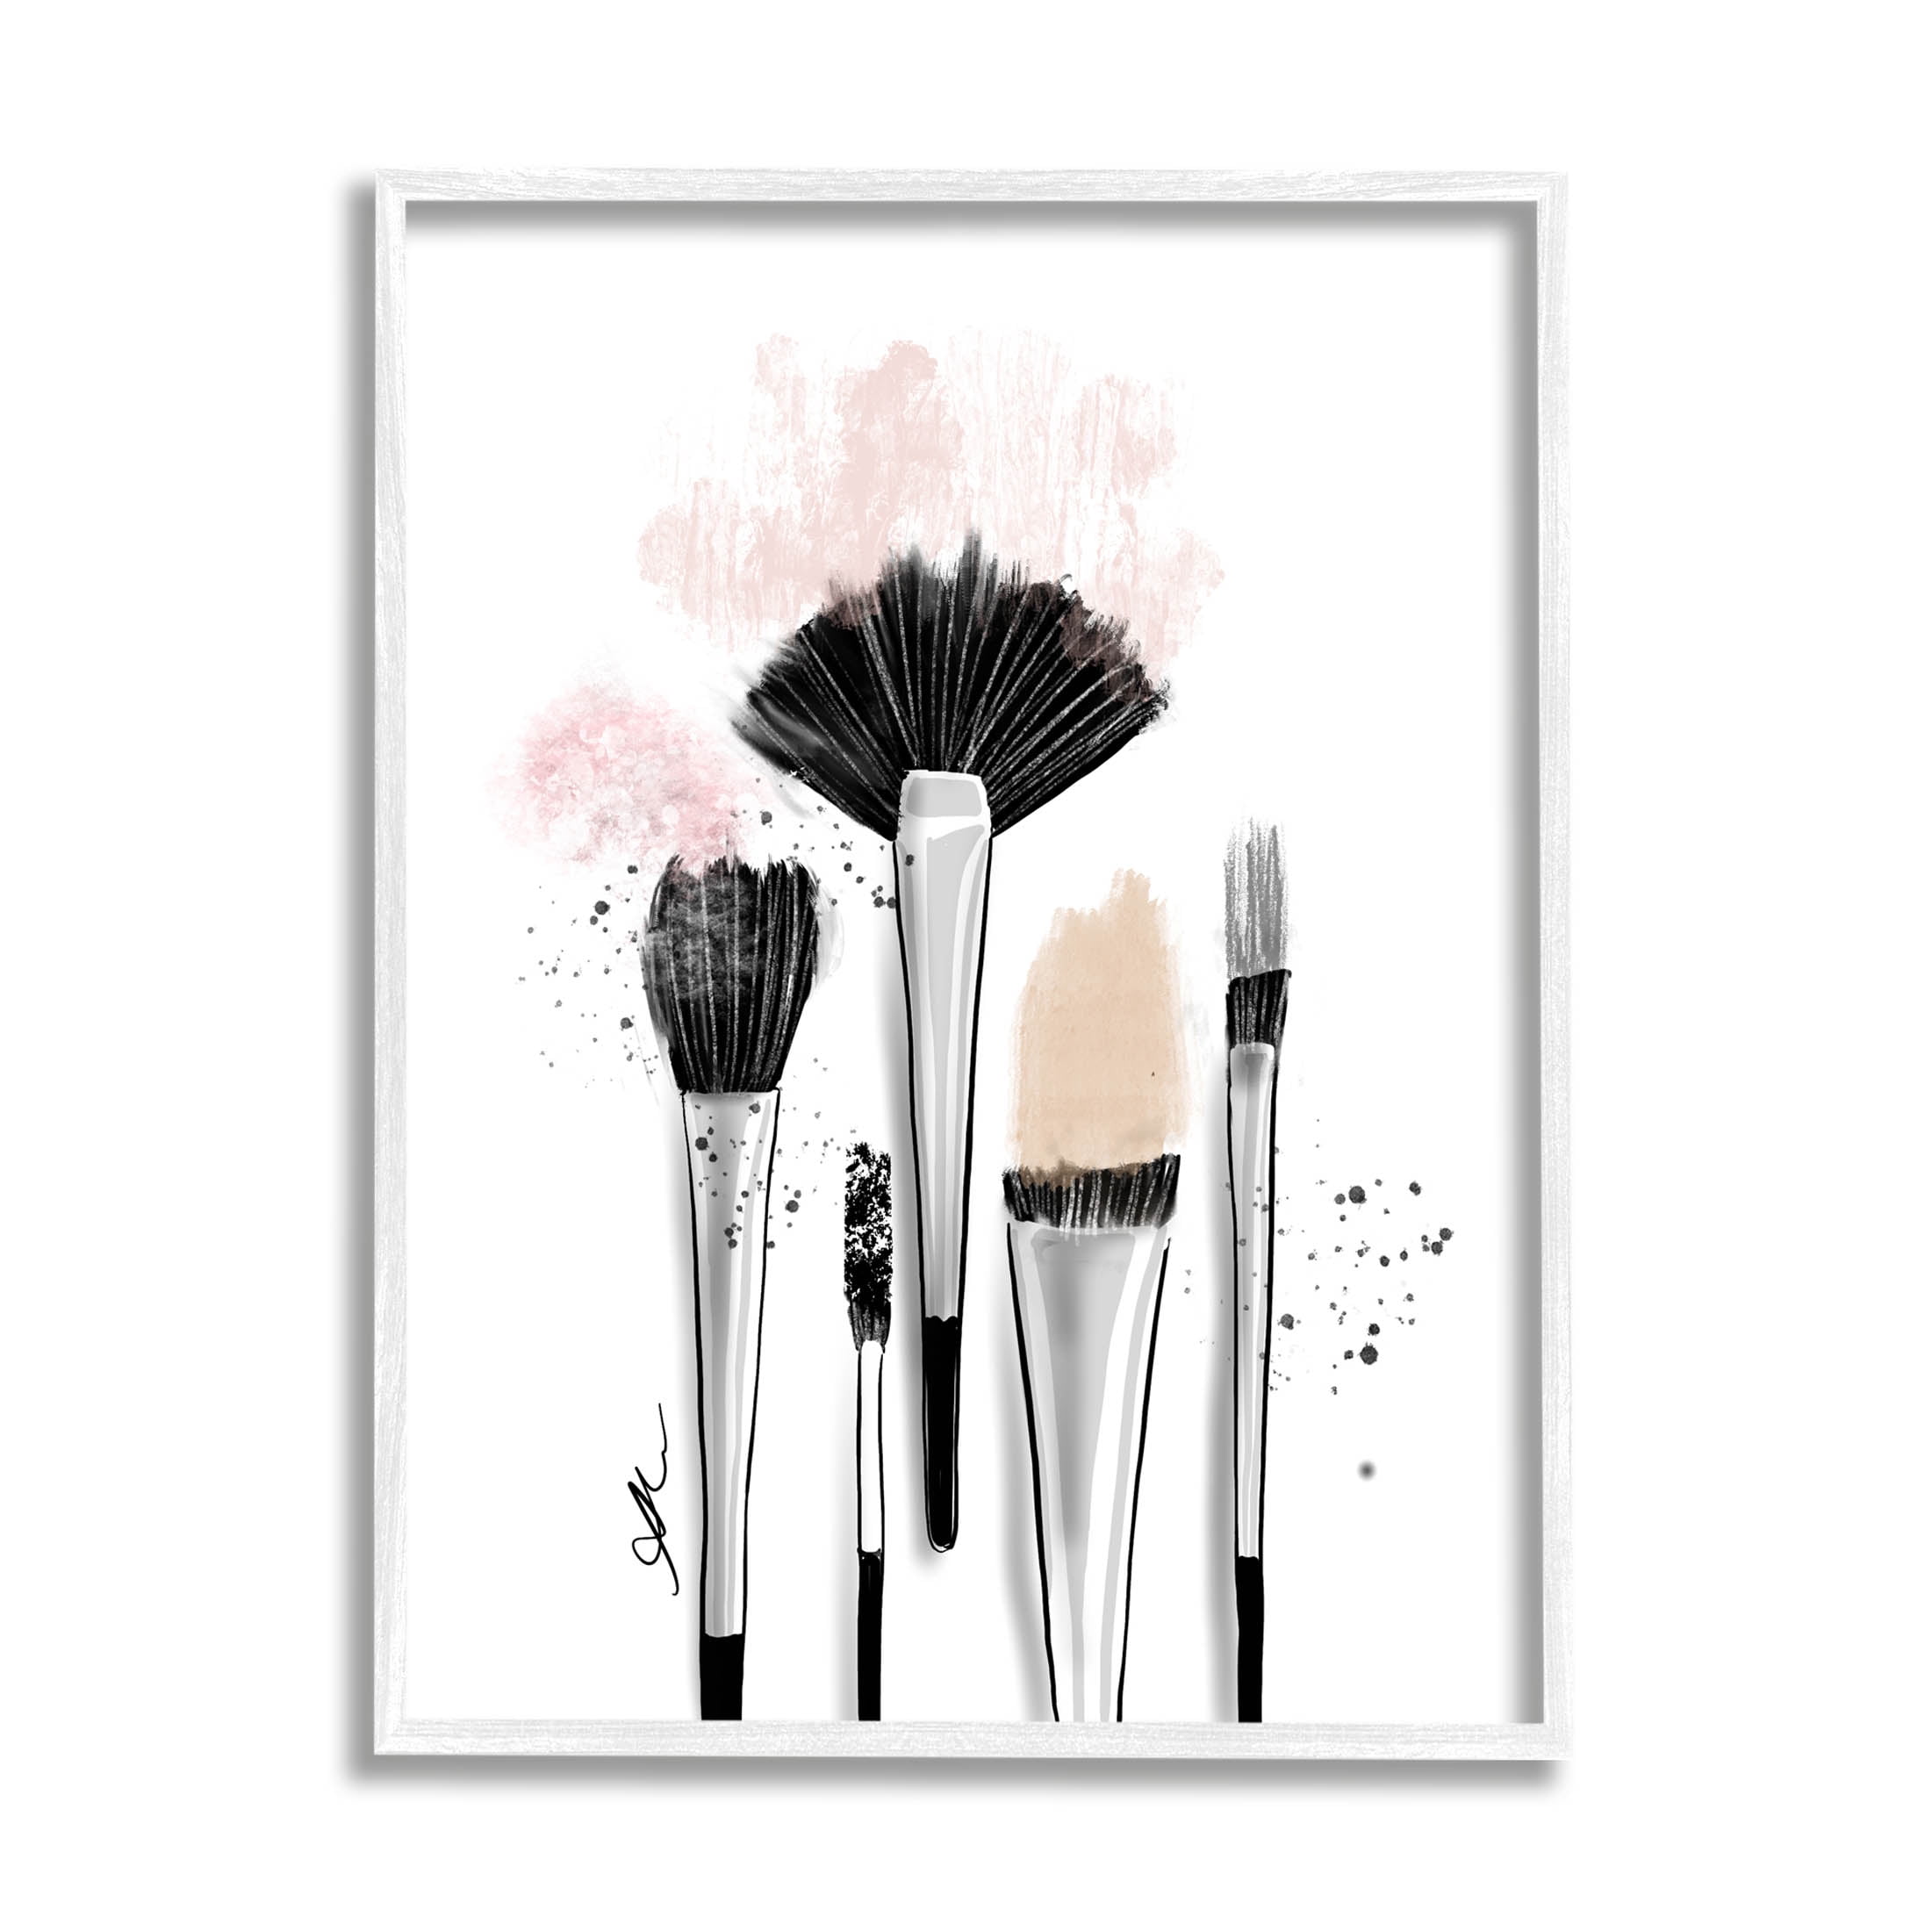 Stupell Makeup Brushes Glam Tools Framed Giclee Art, Design by Alison Petrie - 16 x 20 - White